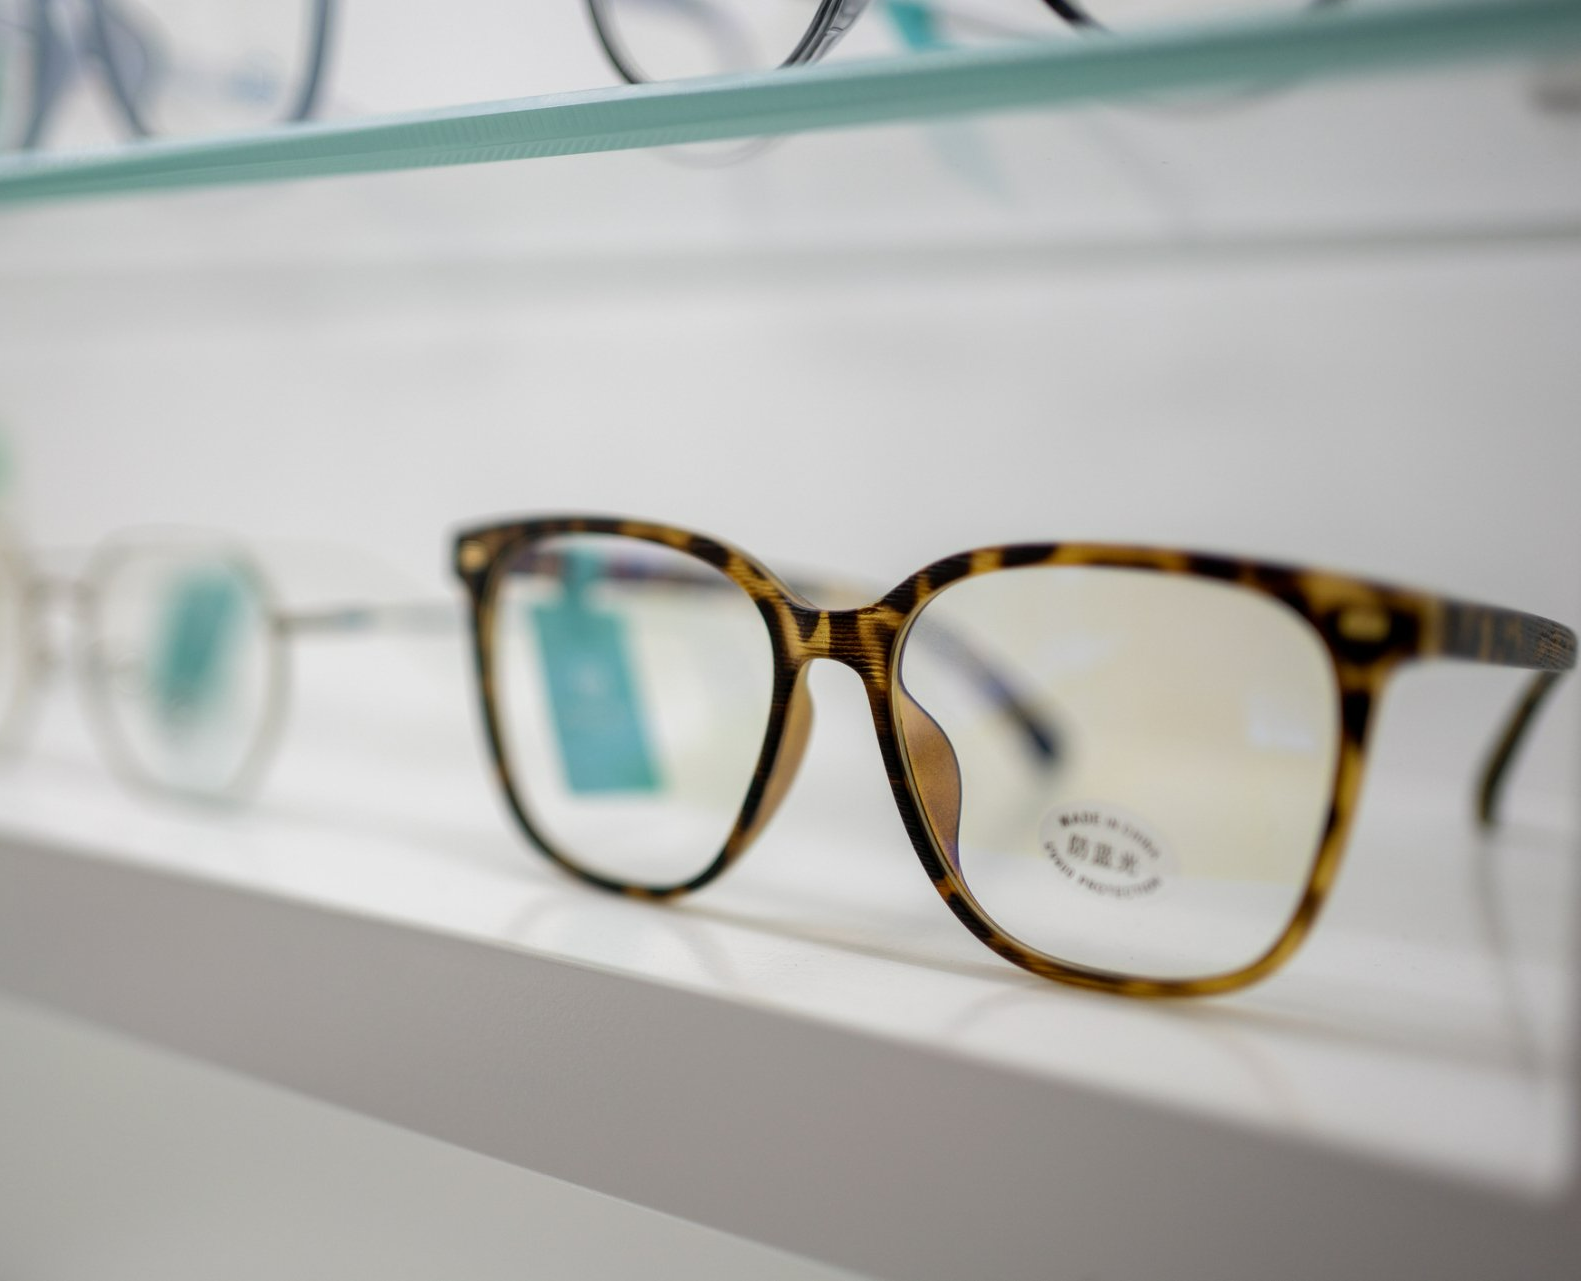 Rummel Optical — Eye Glasses and Contact Lenses in Prescott, AZ